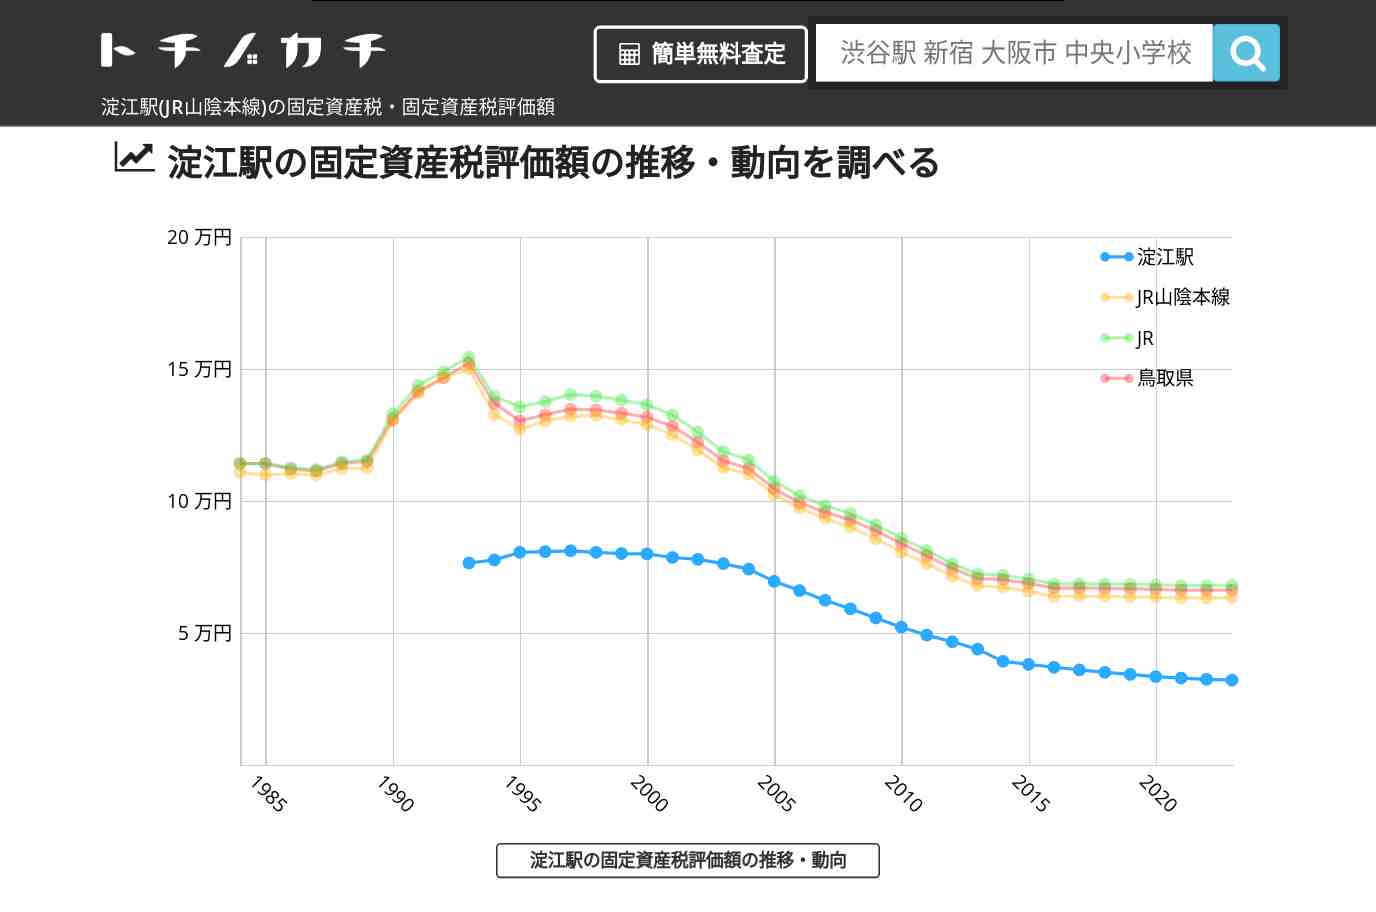 淀江駅(JR山陰本線)の固定資産税・固定資産税評価額 | トチノカチ